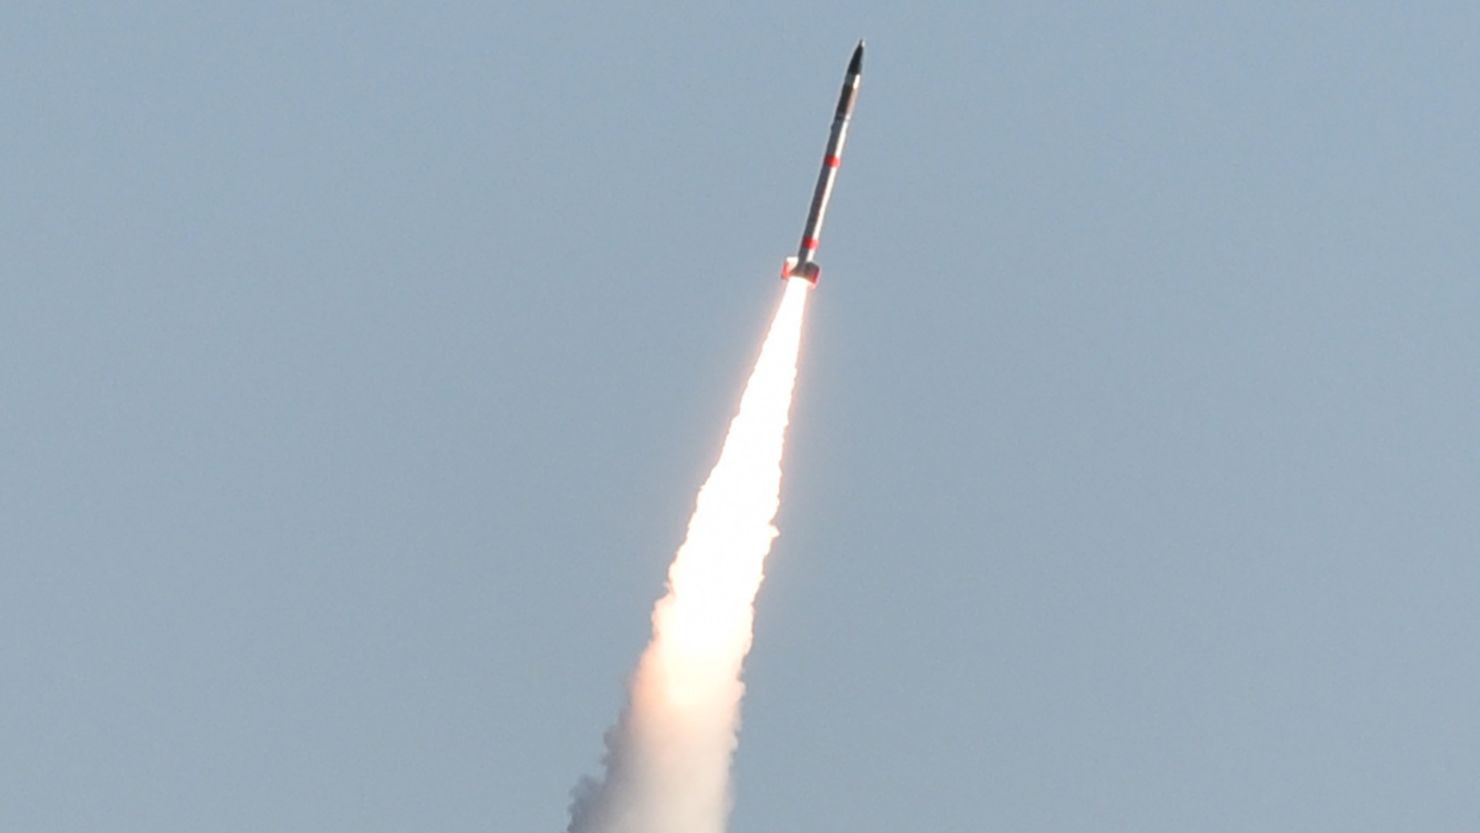 https://media.cnn.com/api/v1/images/stellar/prod/170115103856-japan-mini-rocket.jpg?q=x_2,y_402,h_937,w_1666,c_crop/h_833,w_1480